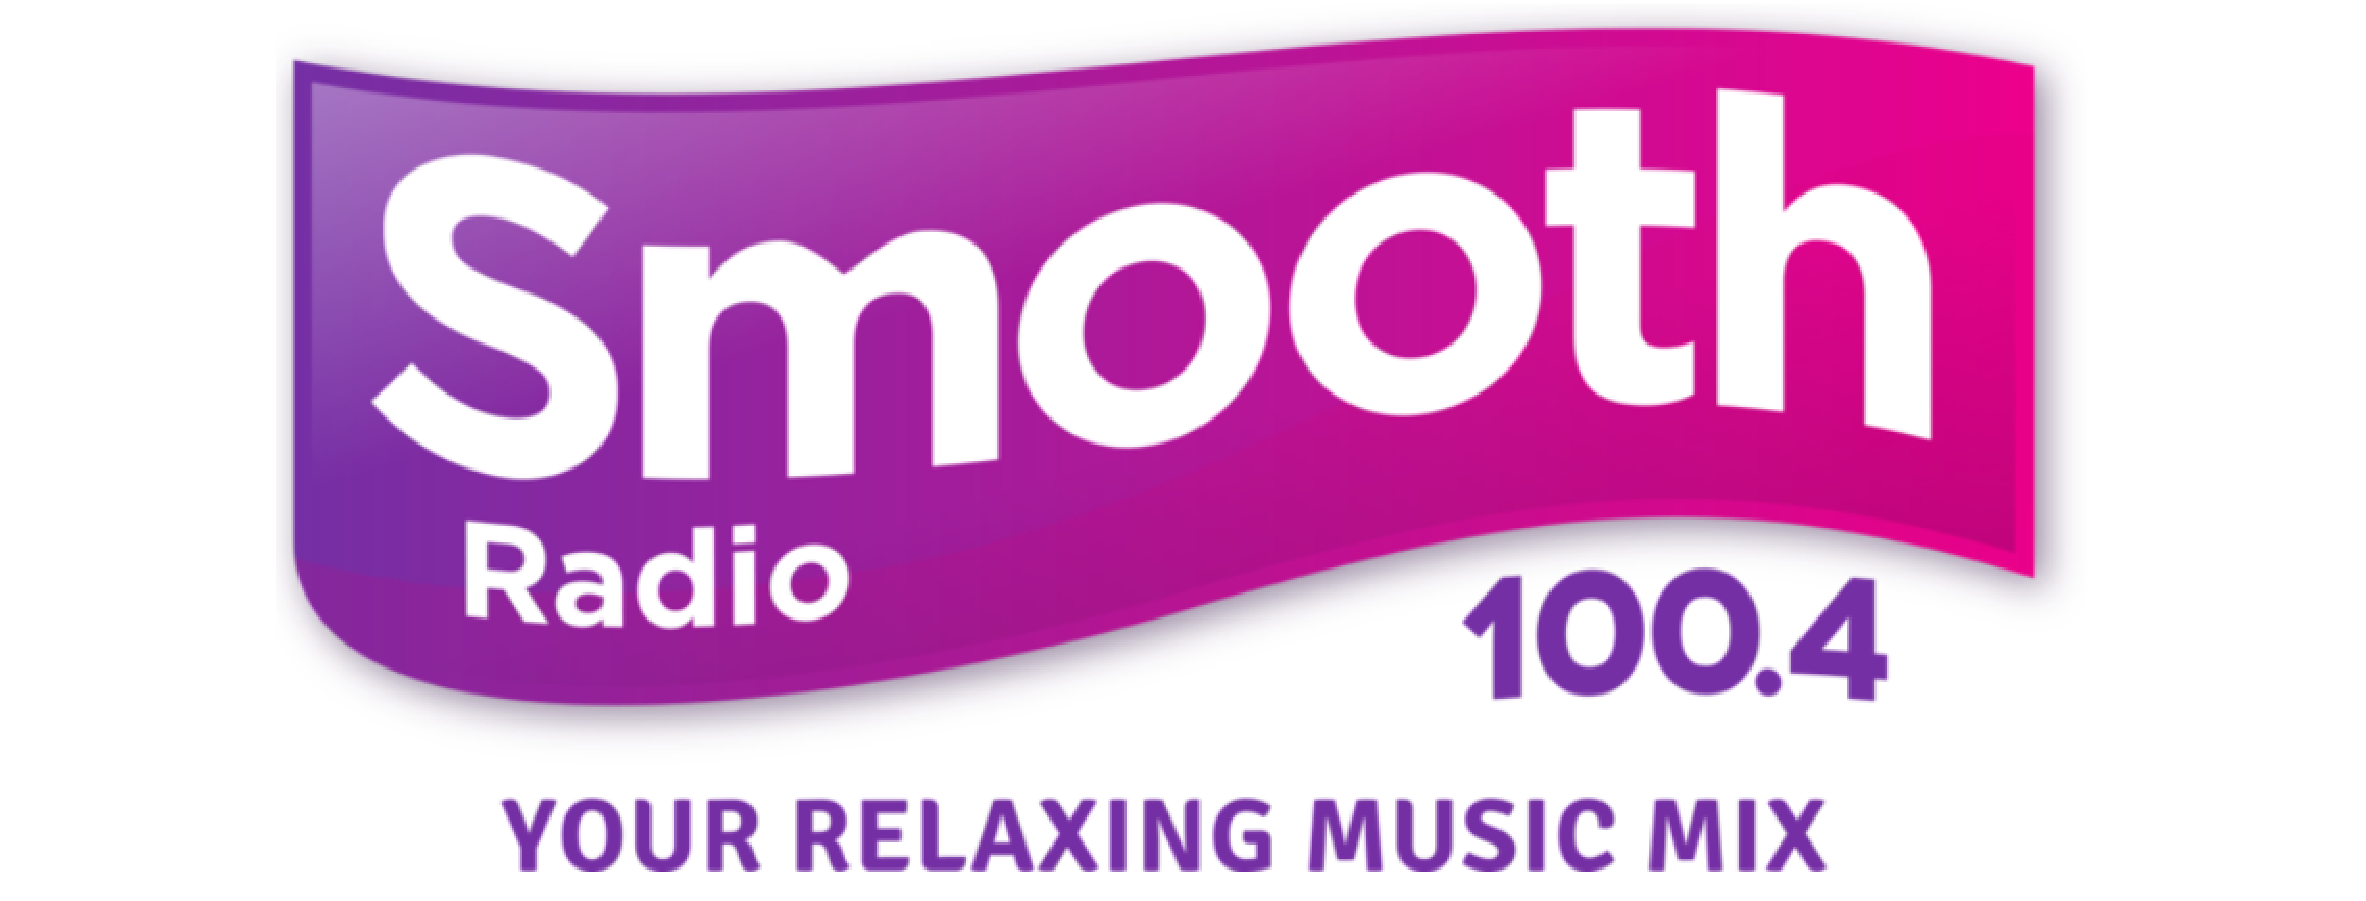 smooth FM logo-01-01.png